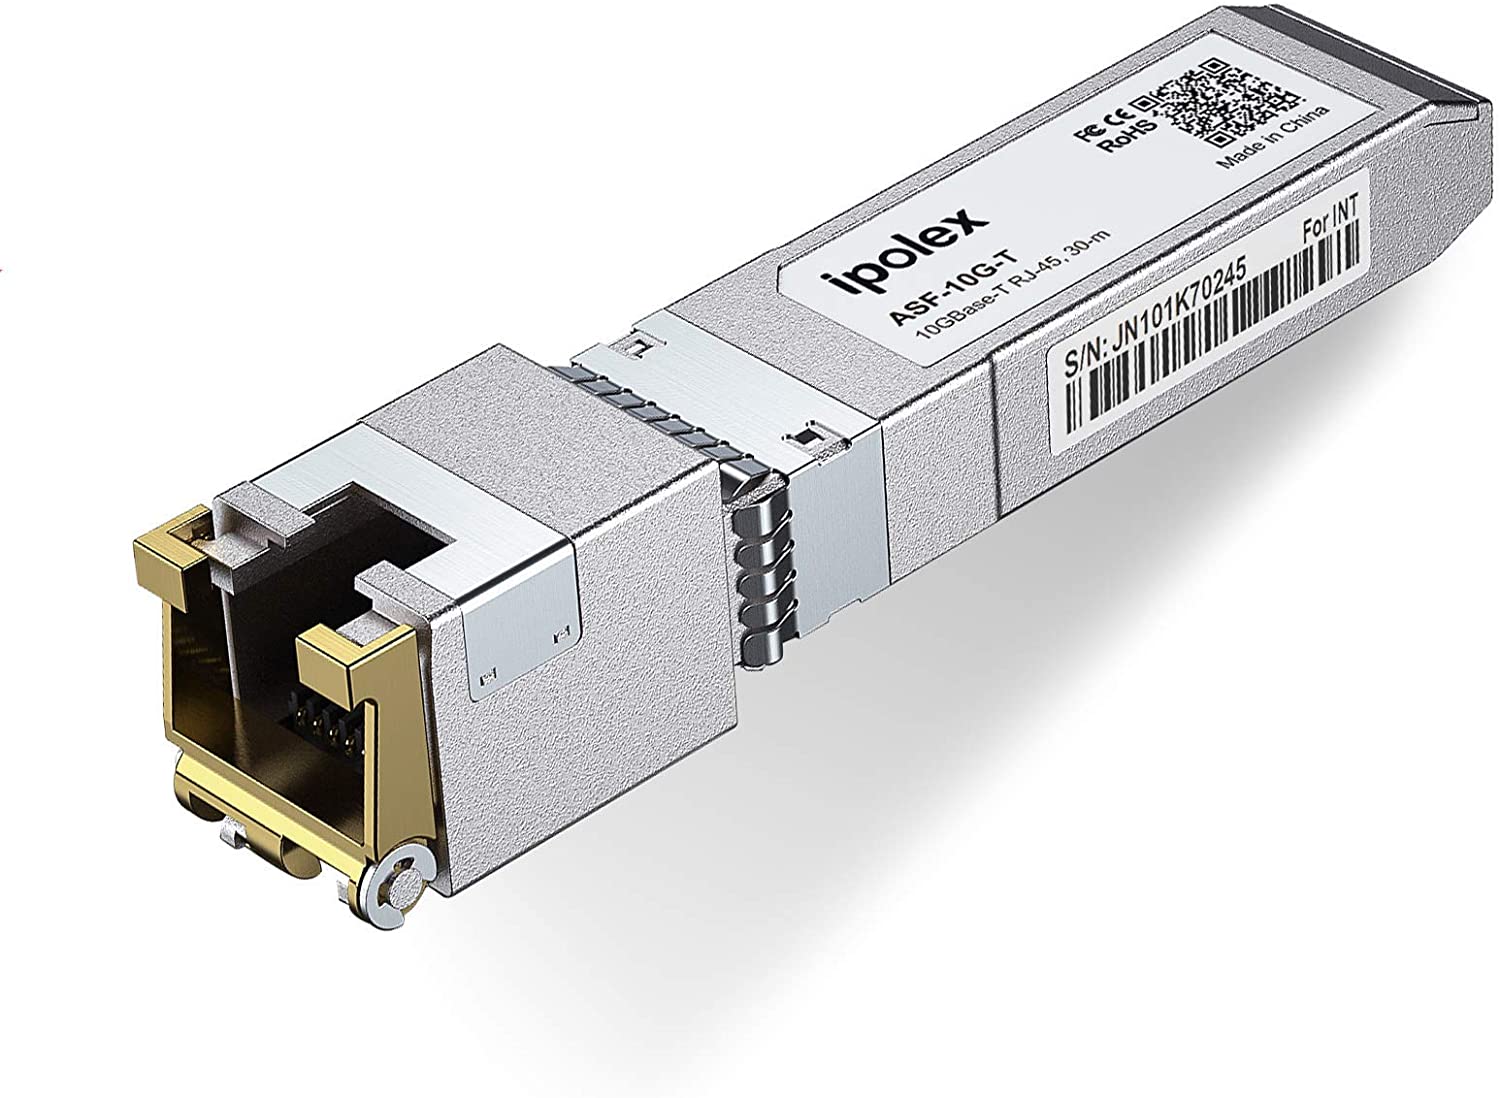 Ipolex for 10GbE SFP optic Fiber Transceiver